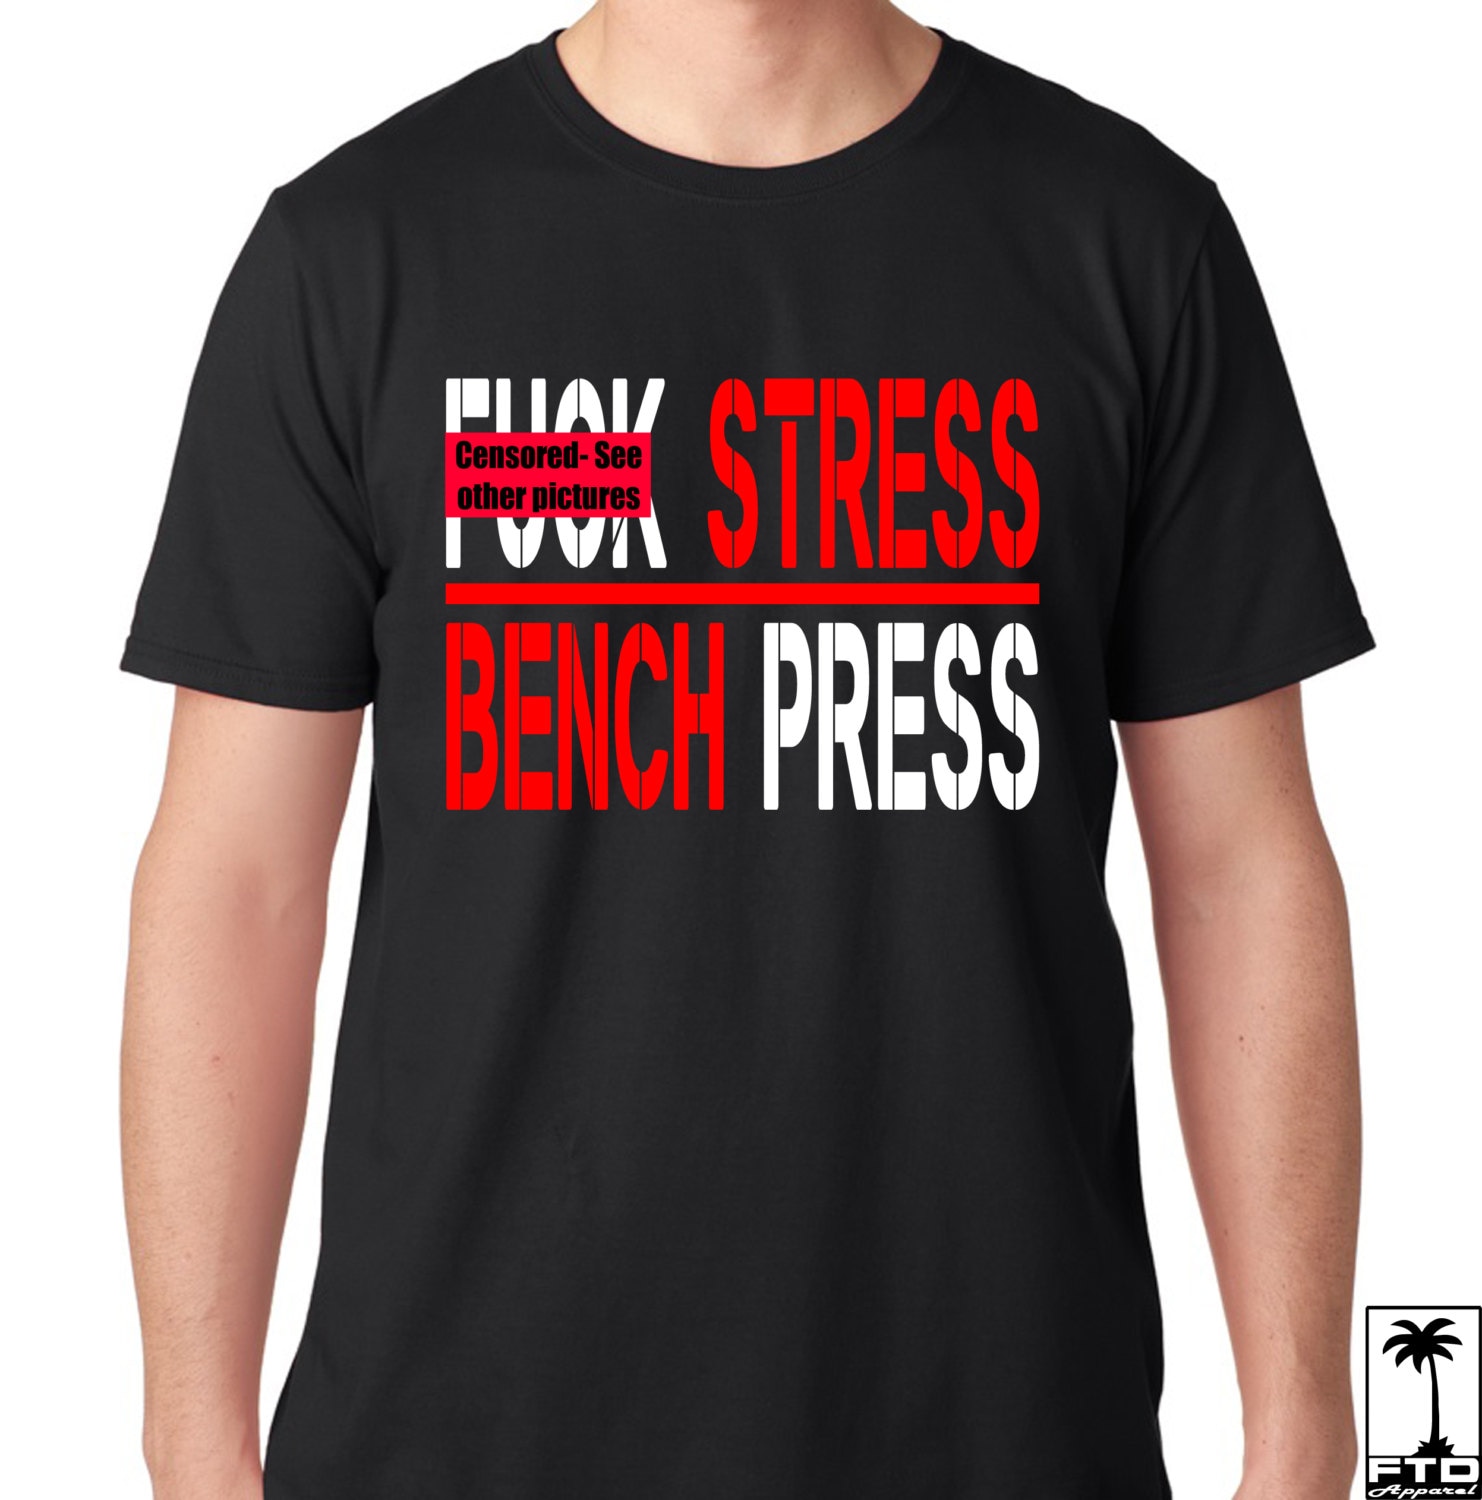 Fck Stress Bench Press Gym T Shirt by FTDApparel on Etsy